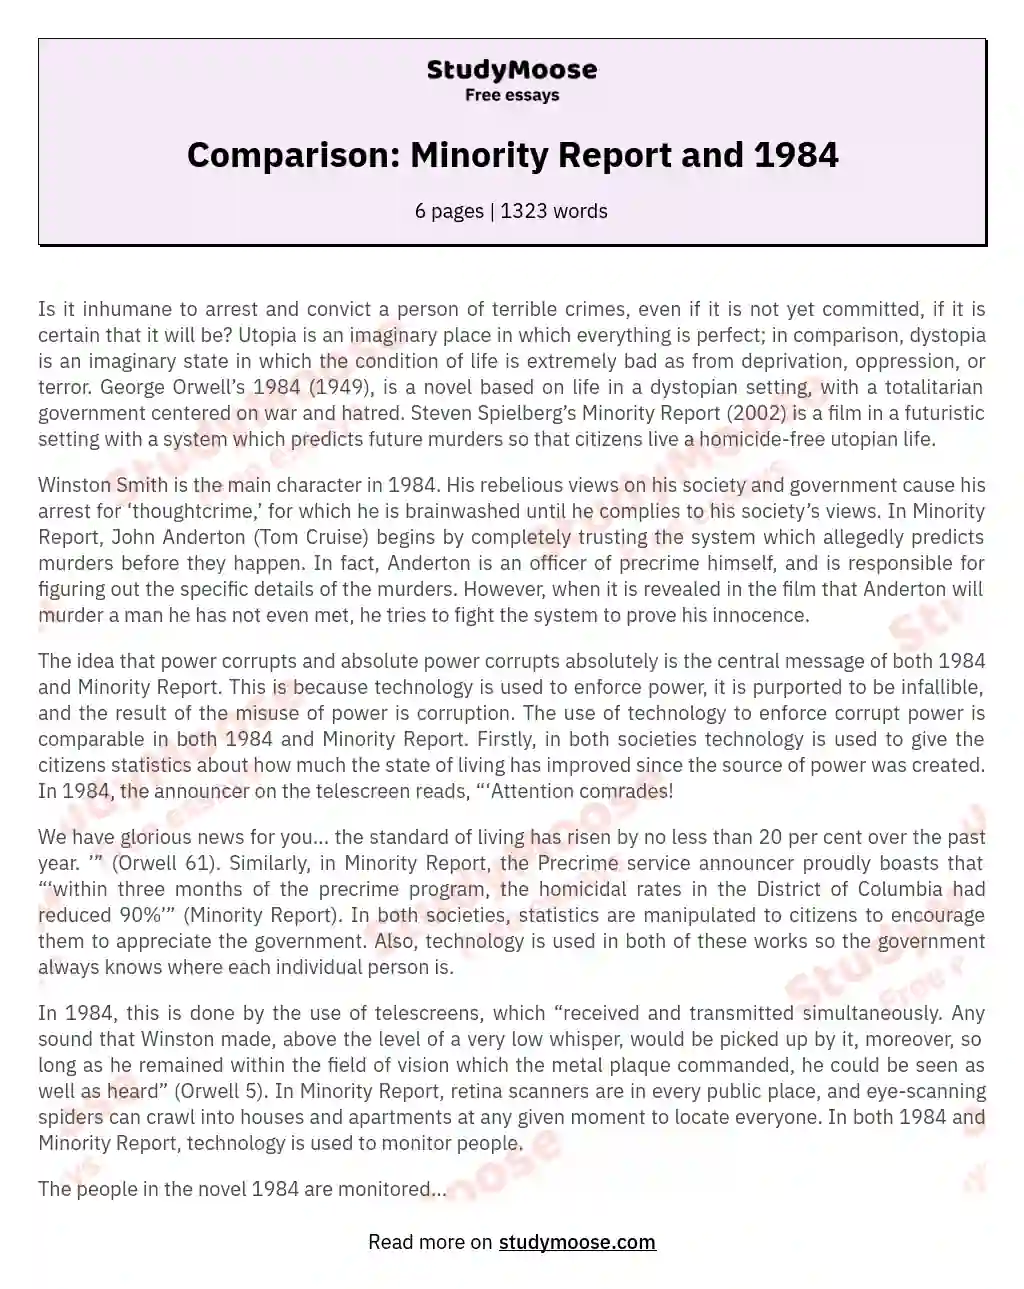 Comparison: Minority Report and 1984 essay